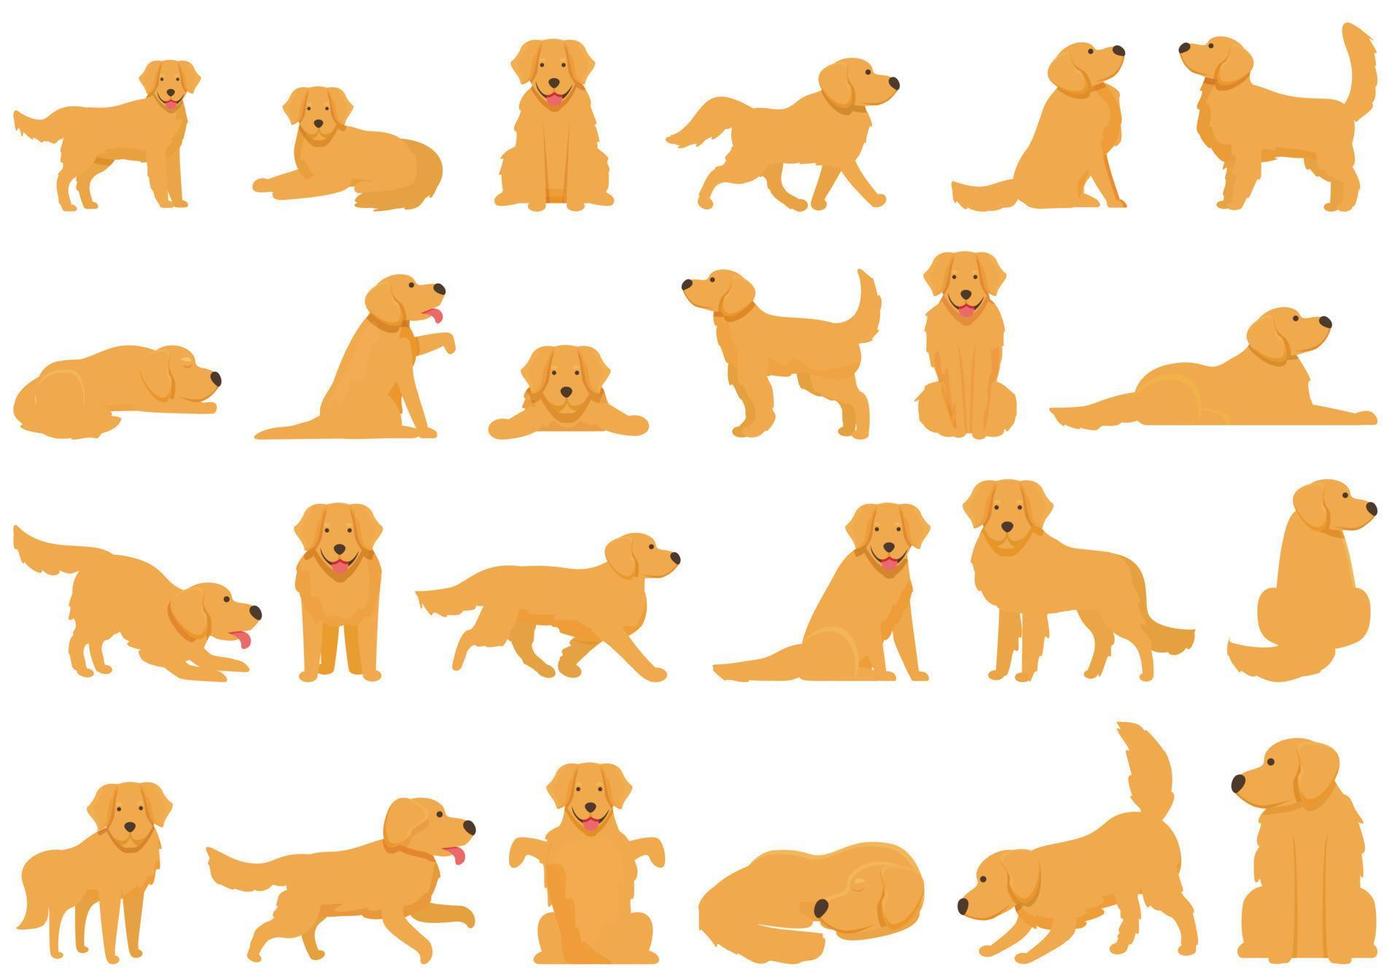 icônes de golden retriever définies vecteur de dessin animé. chien labrador